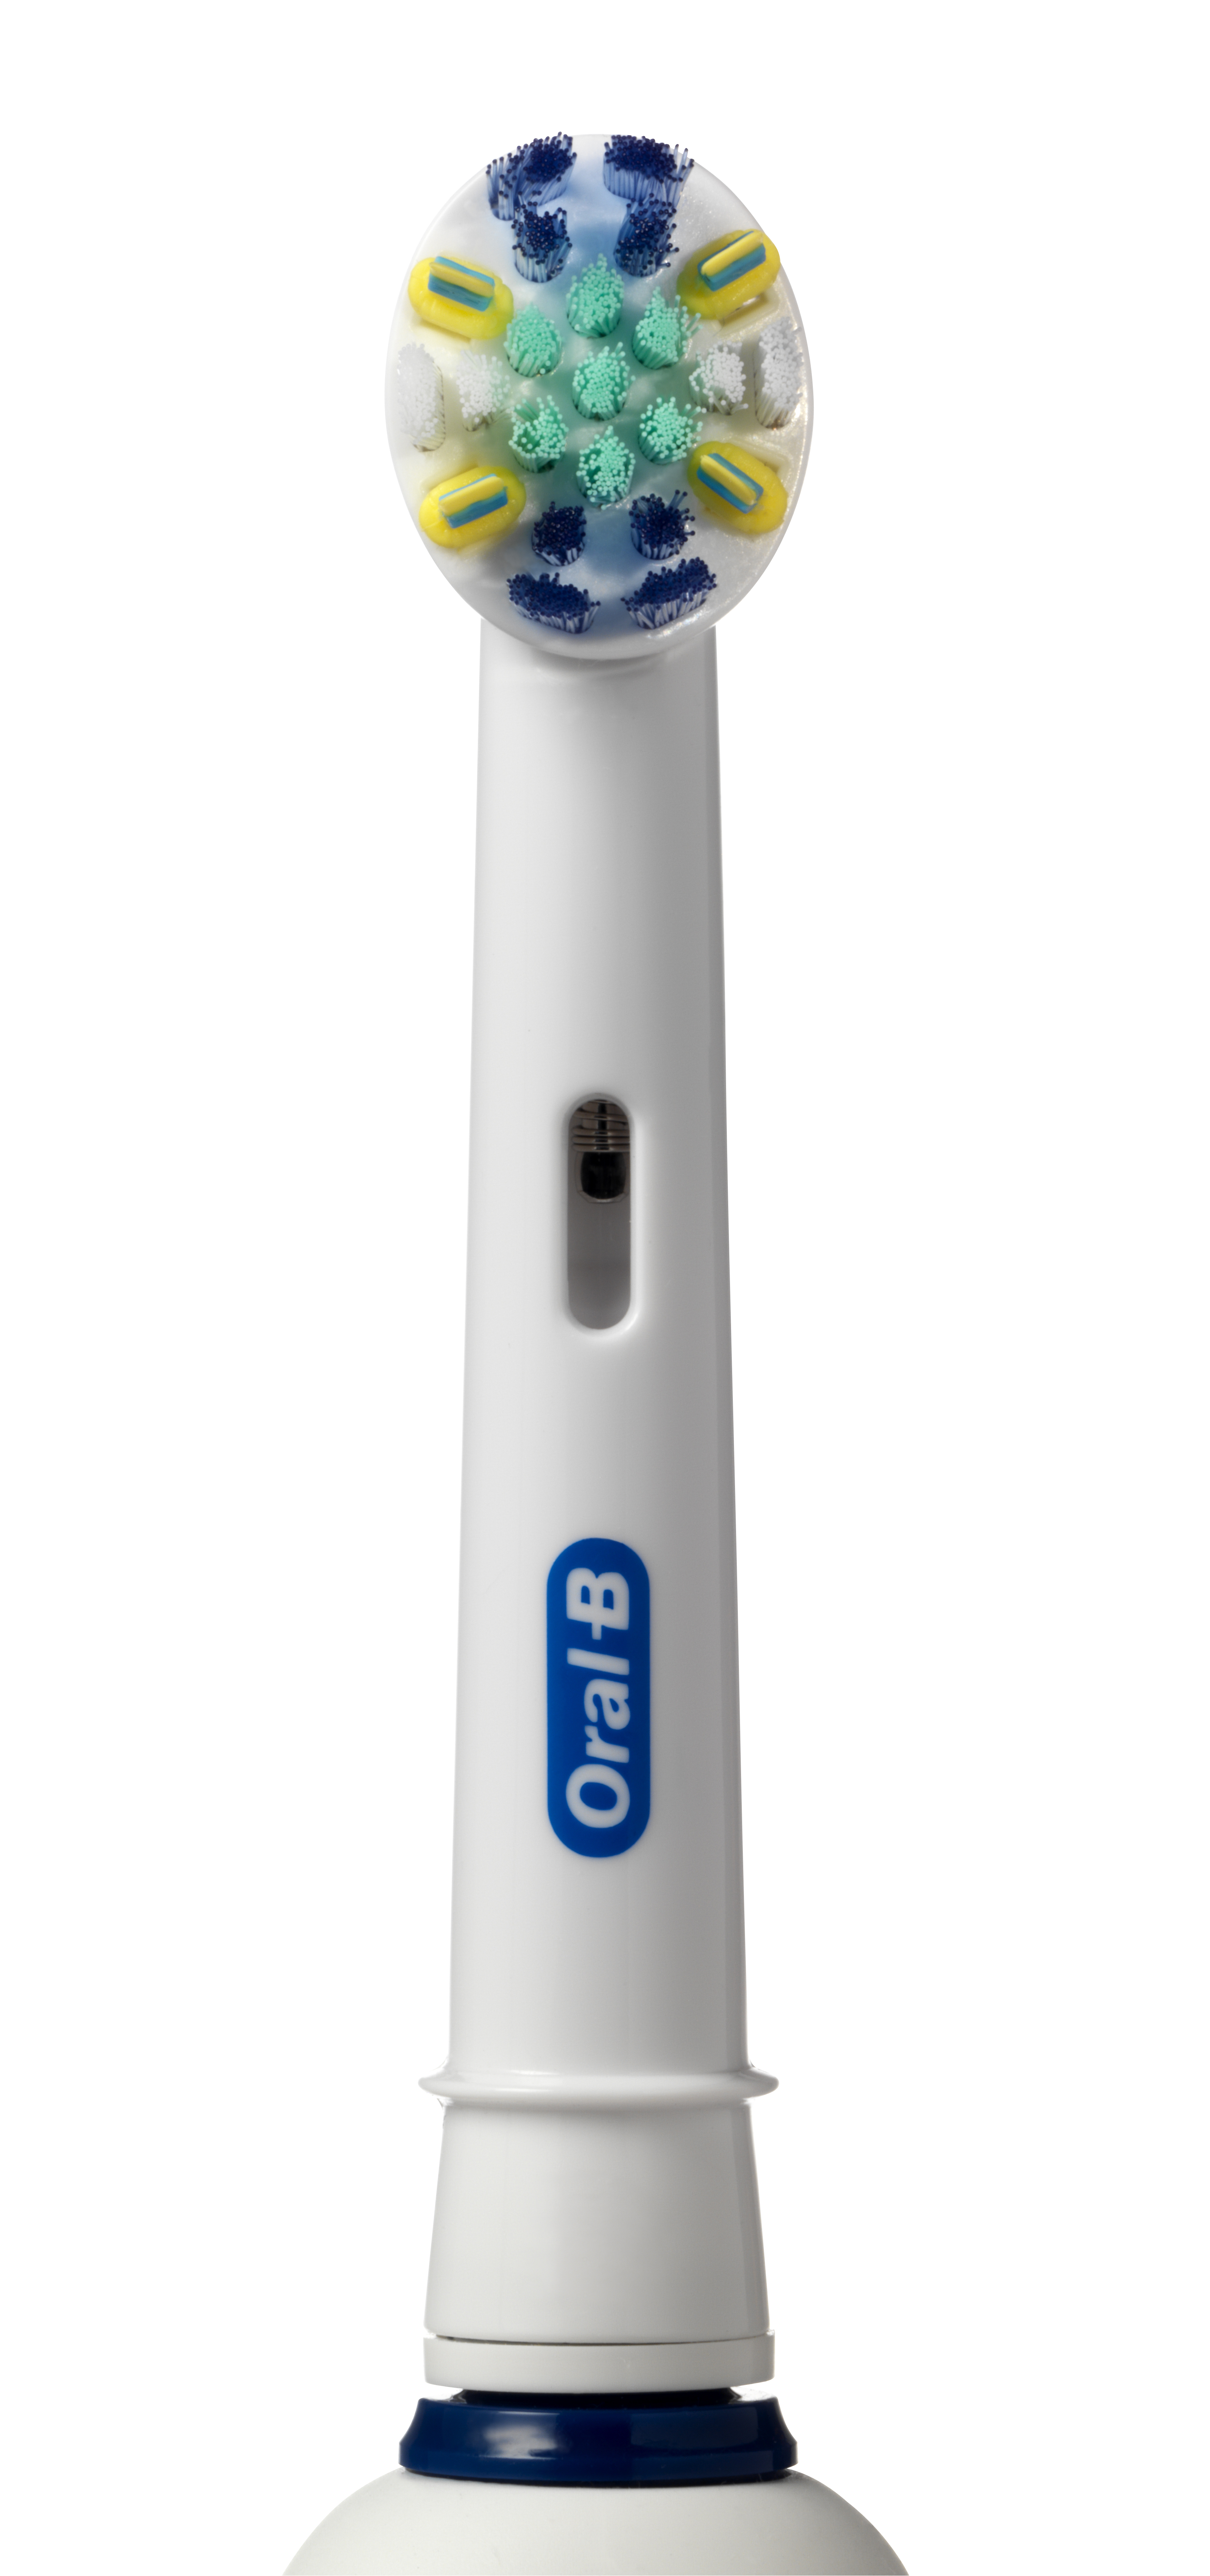 Oral-B Floss Action 2 Elektrische Tandenborstel Opzetborstels